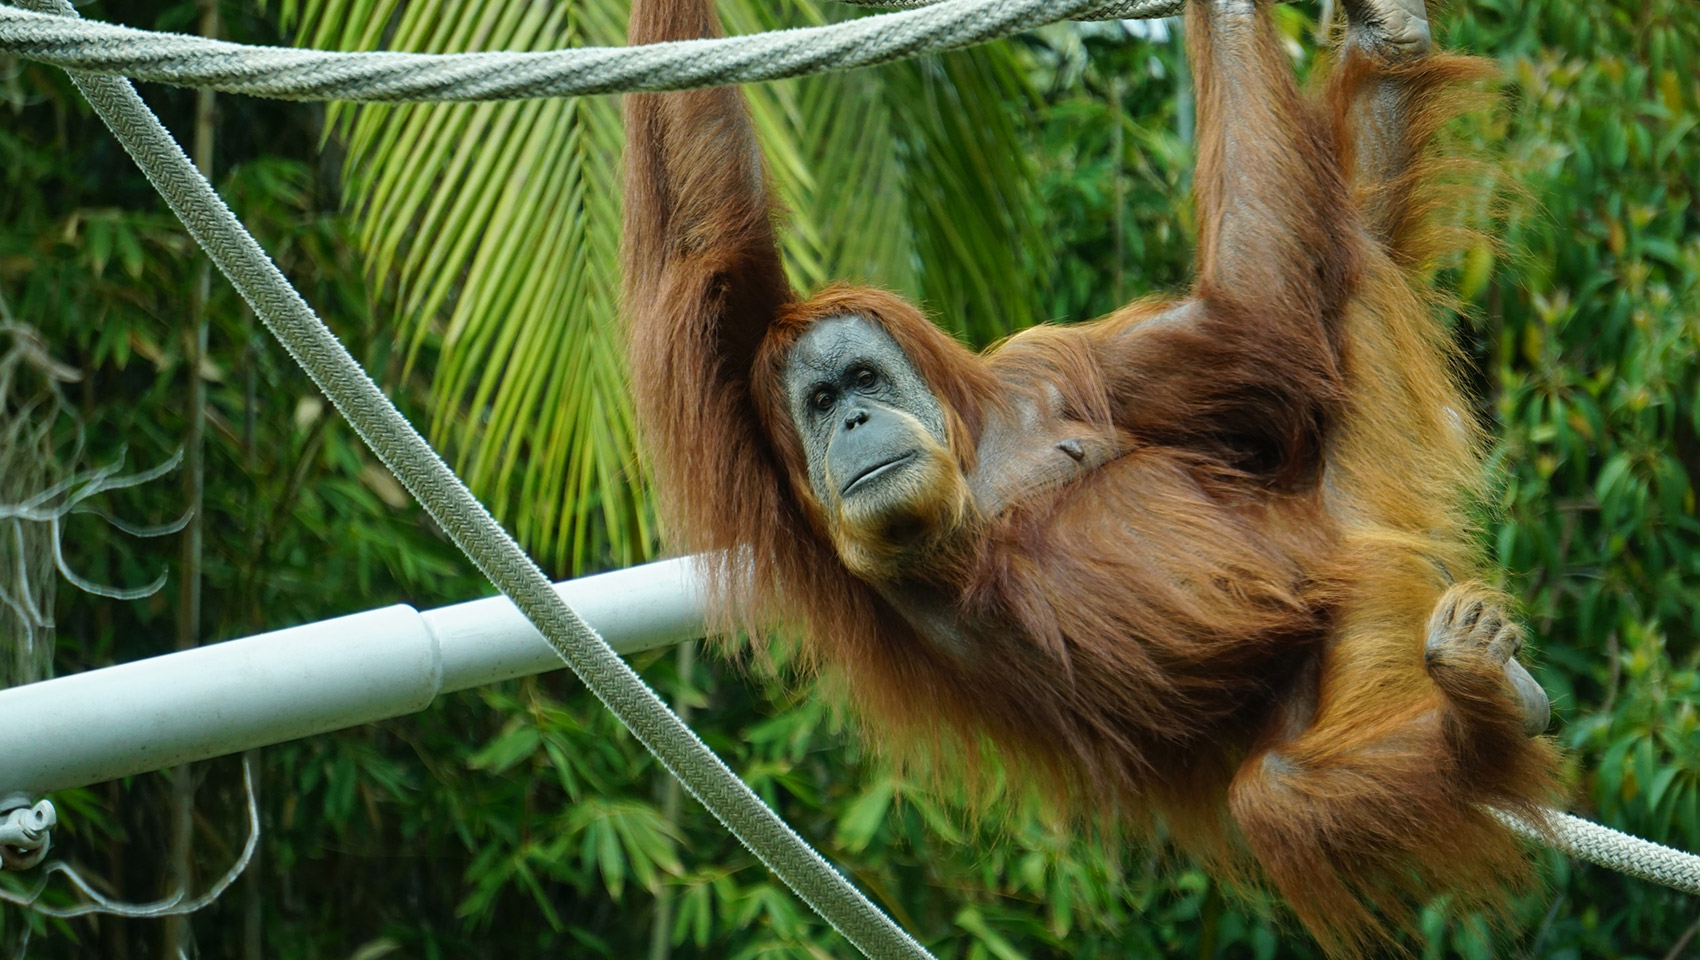 Orangutan at the Fort Worth Zoo